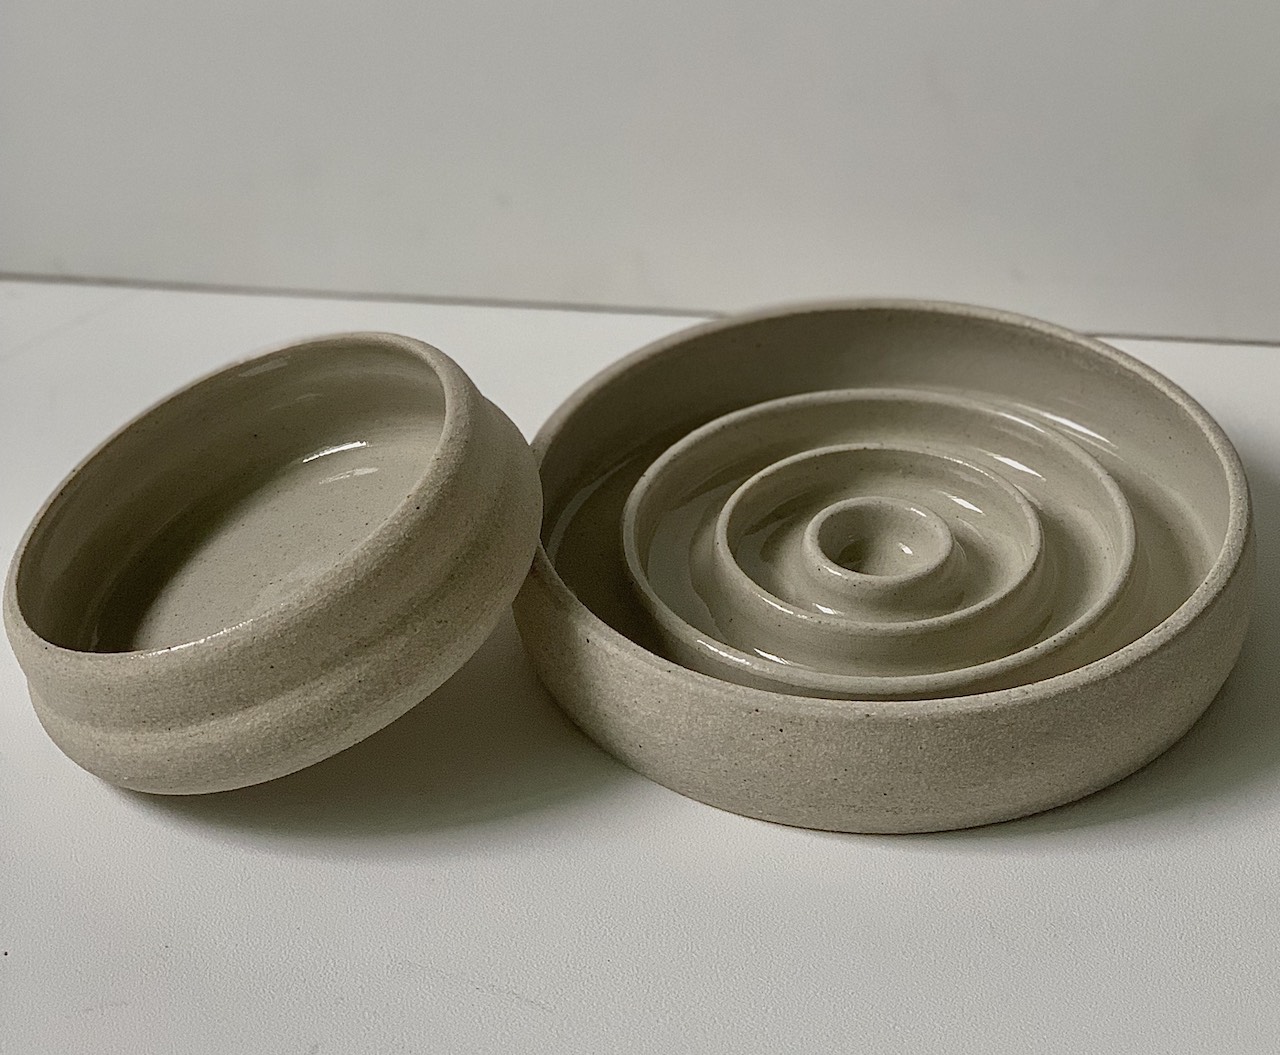 Ceramic slow feeder bowl and regular bowl for pets